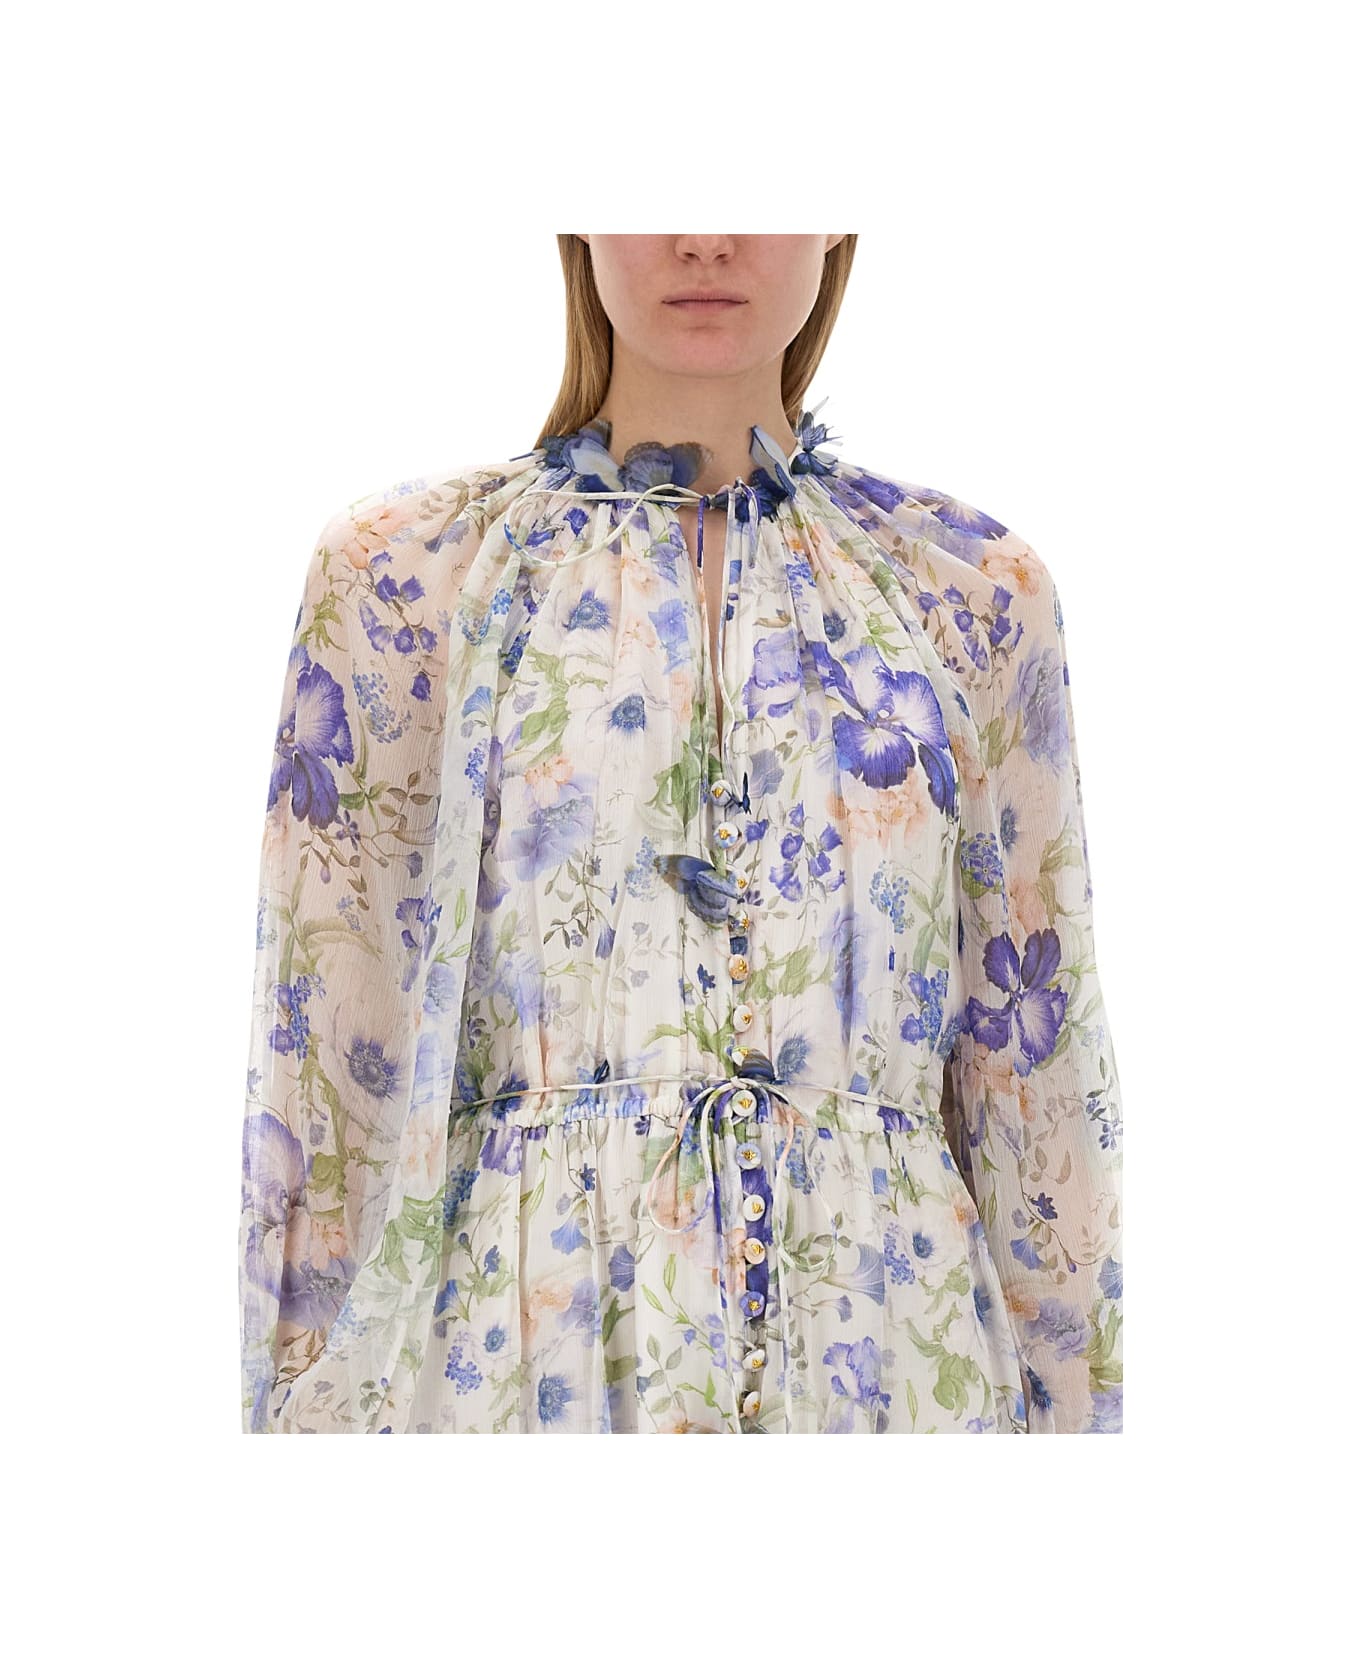 Zimmermann Dress With Floral Pattern - Blugriv Blue Garden Ivory